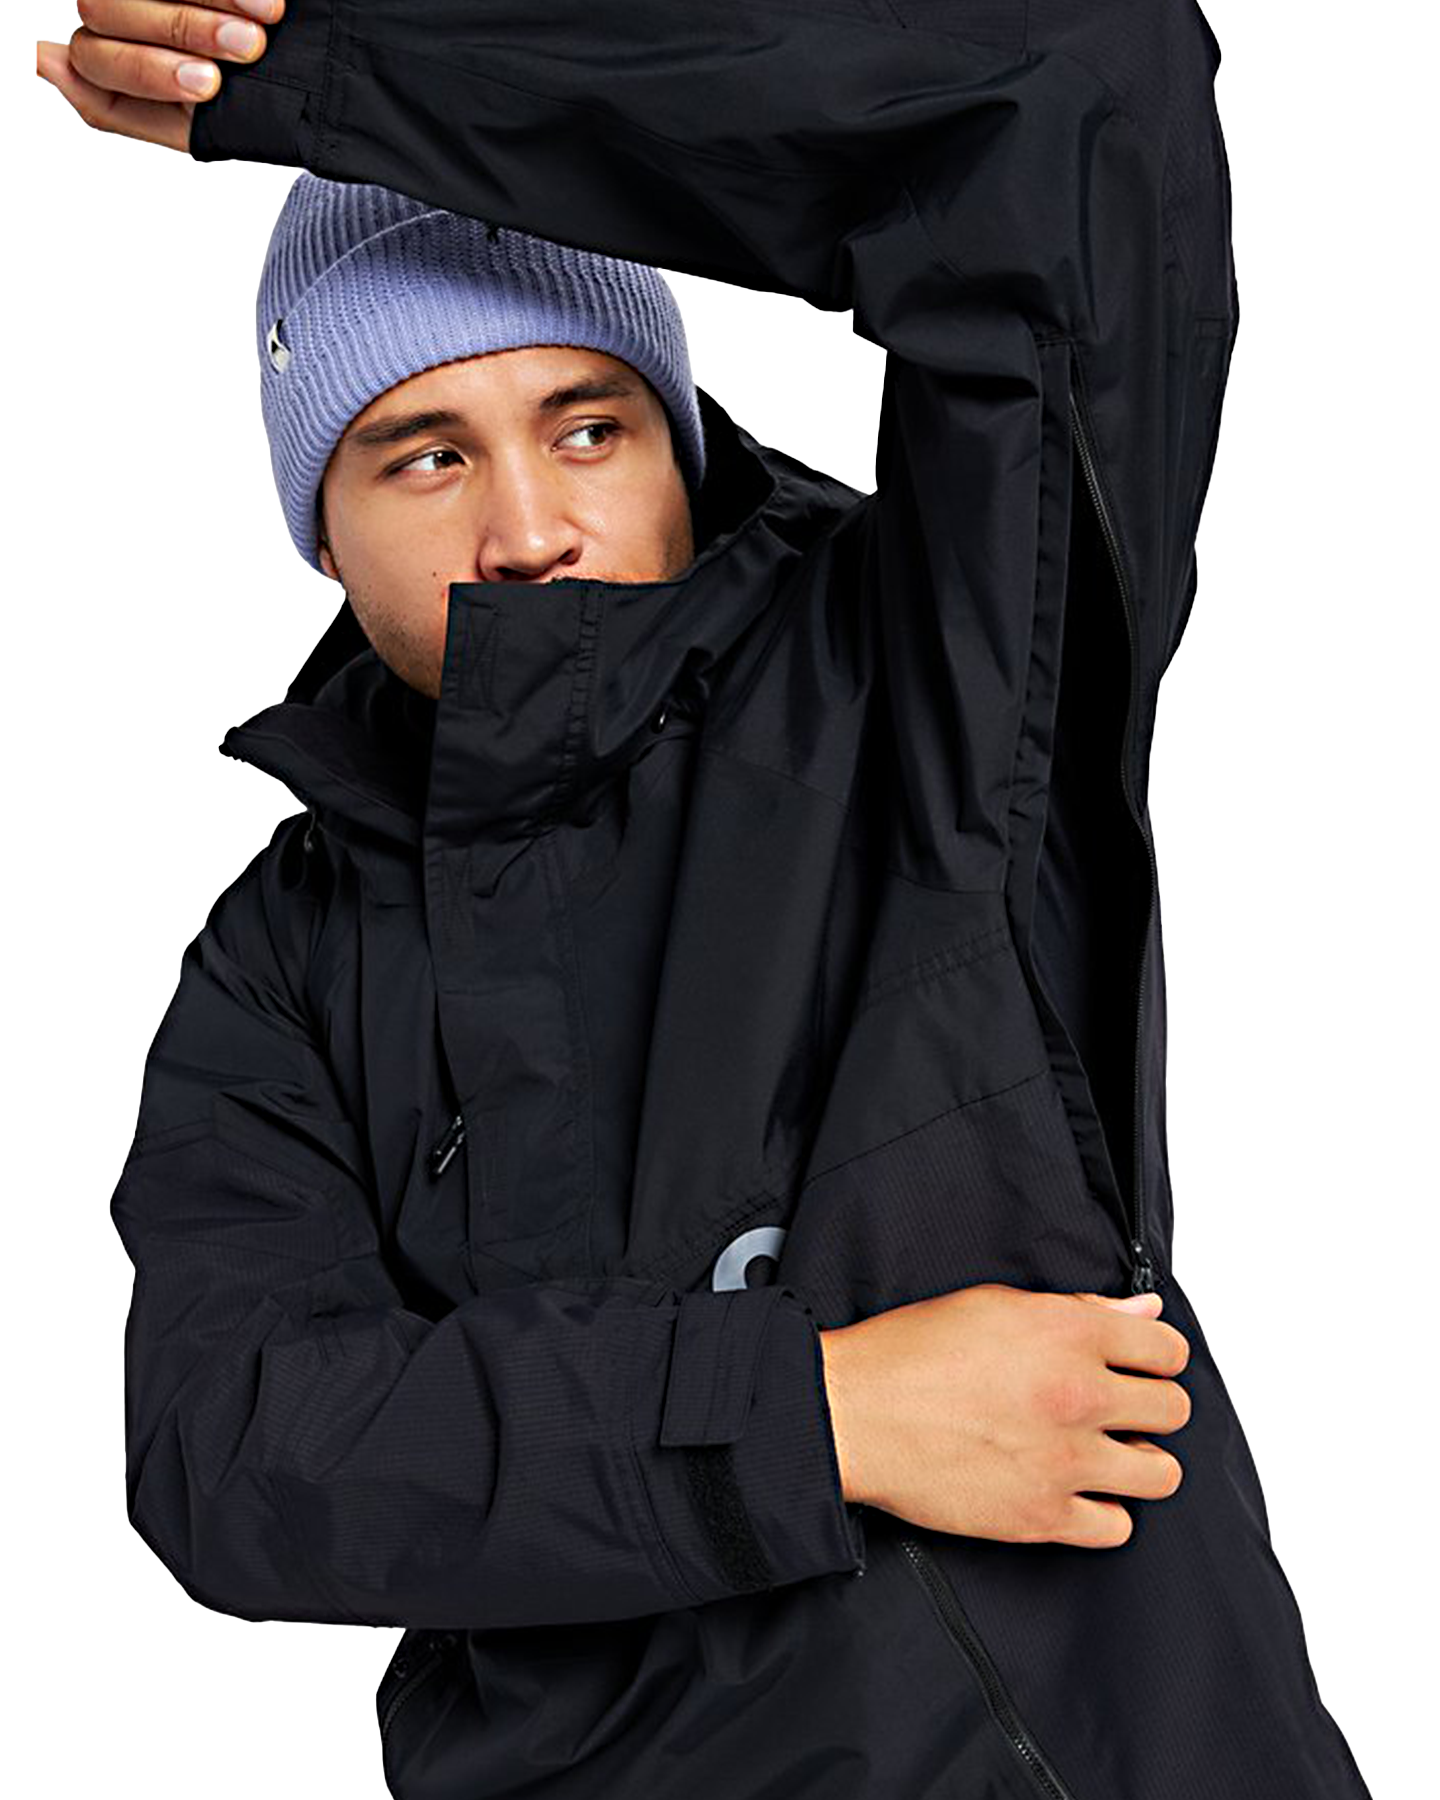 Burton Men's Frostner 2L Anorak Snow Jacket - True Black Men's Snow Jackets - Trojan Wake Ski Snow